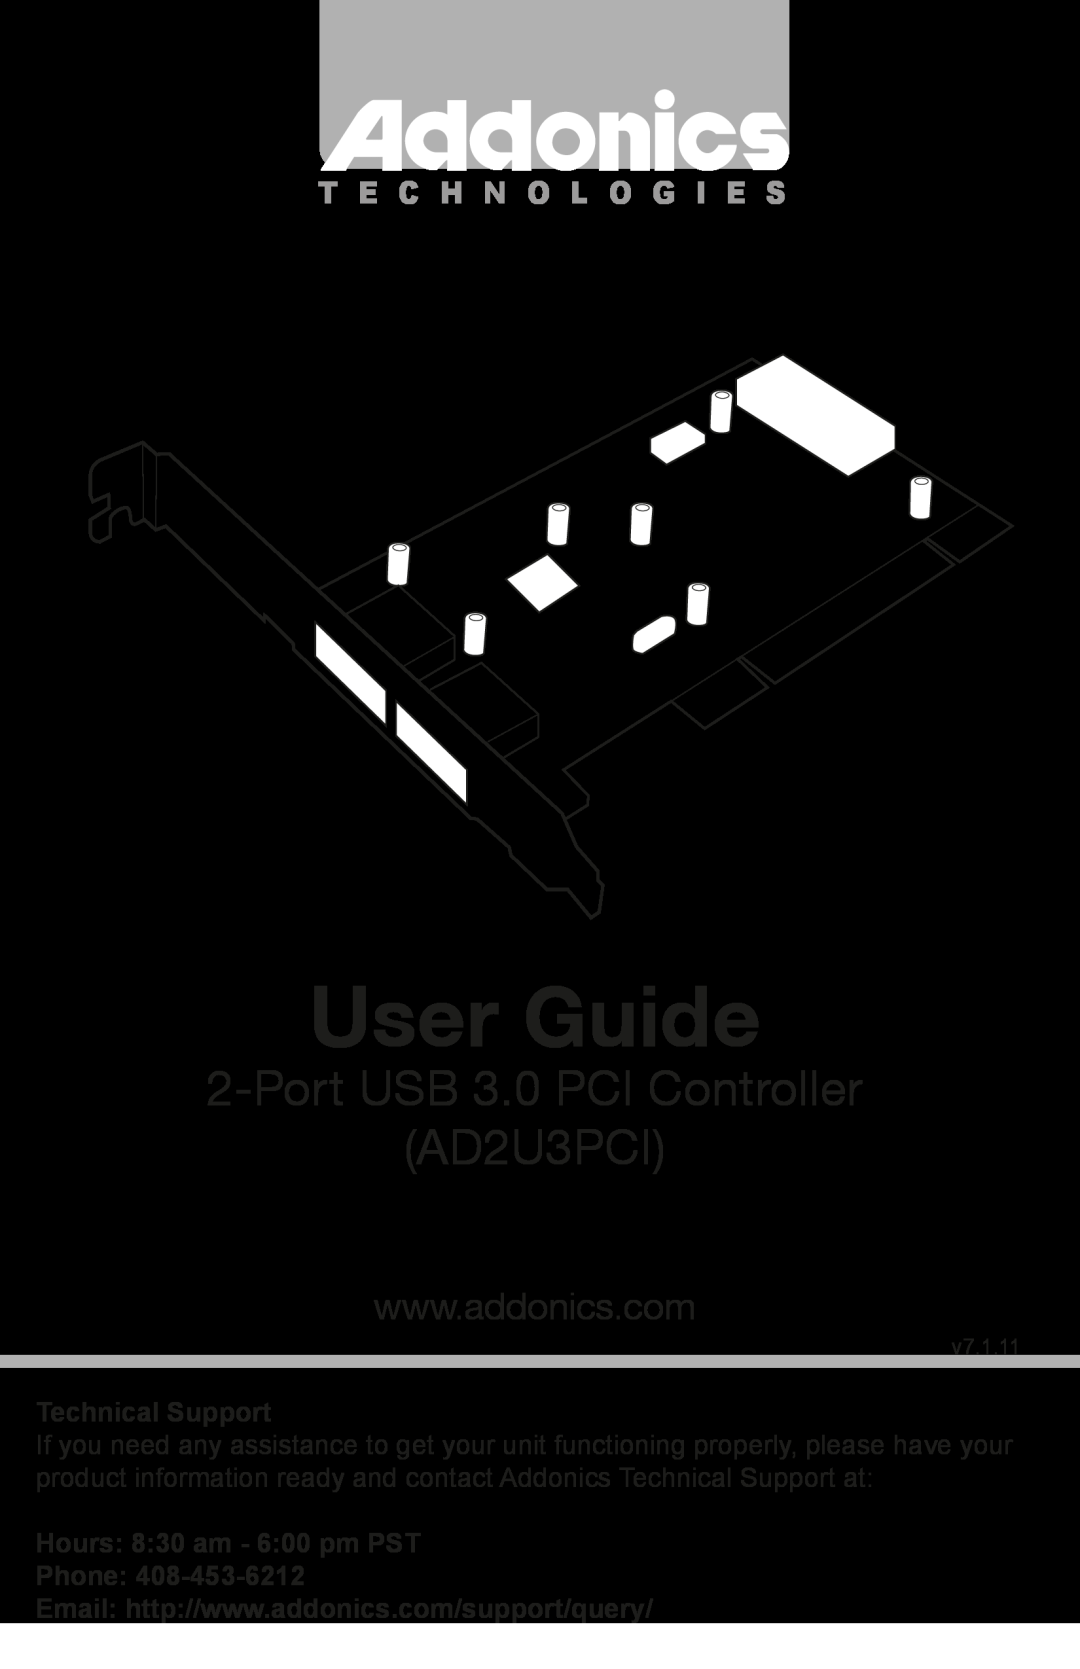 Addonics Technologies manual User Guide, Port USB 3.0 PCI Controller AD2U3PCI, T E C H N O L O G I E S, v7.1.11 